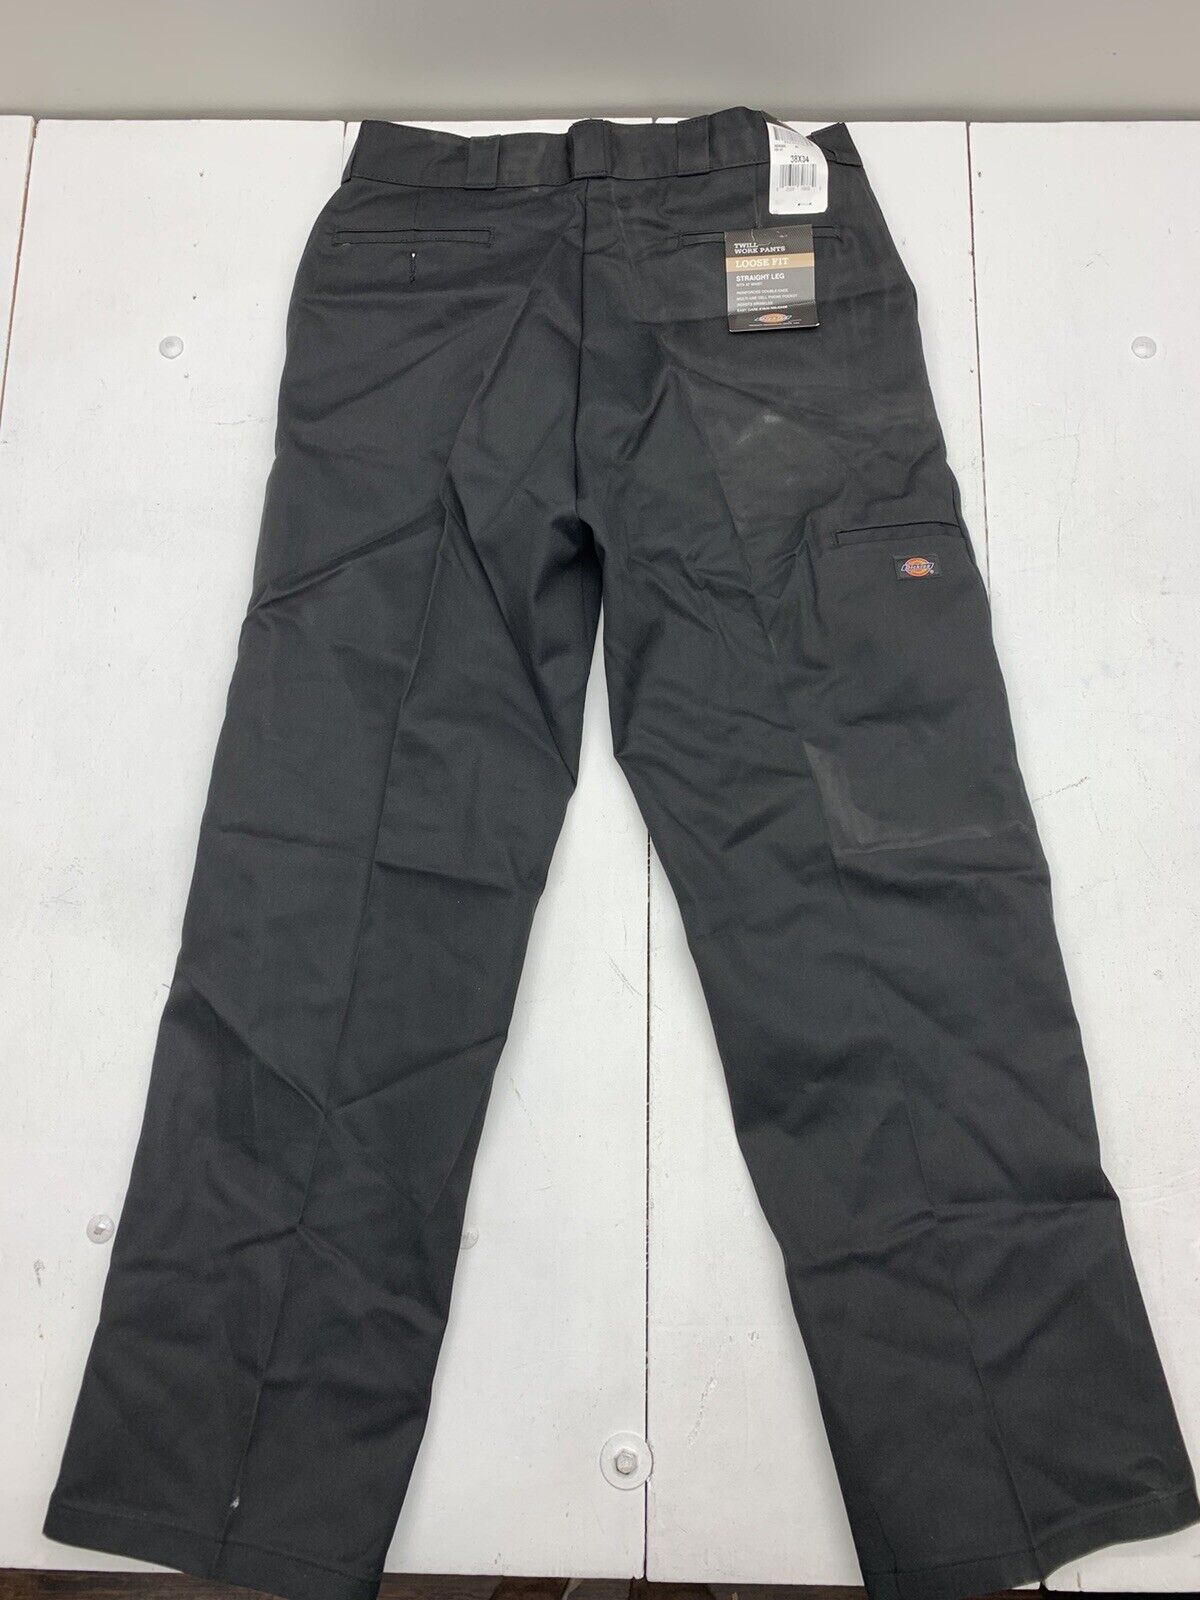 Dickies Men's Work Pant - Black Size 38/34 - beyond exchange